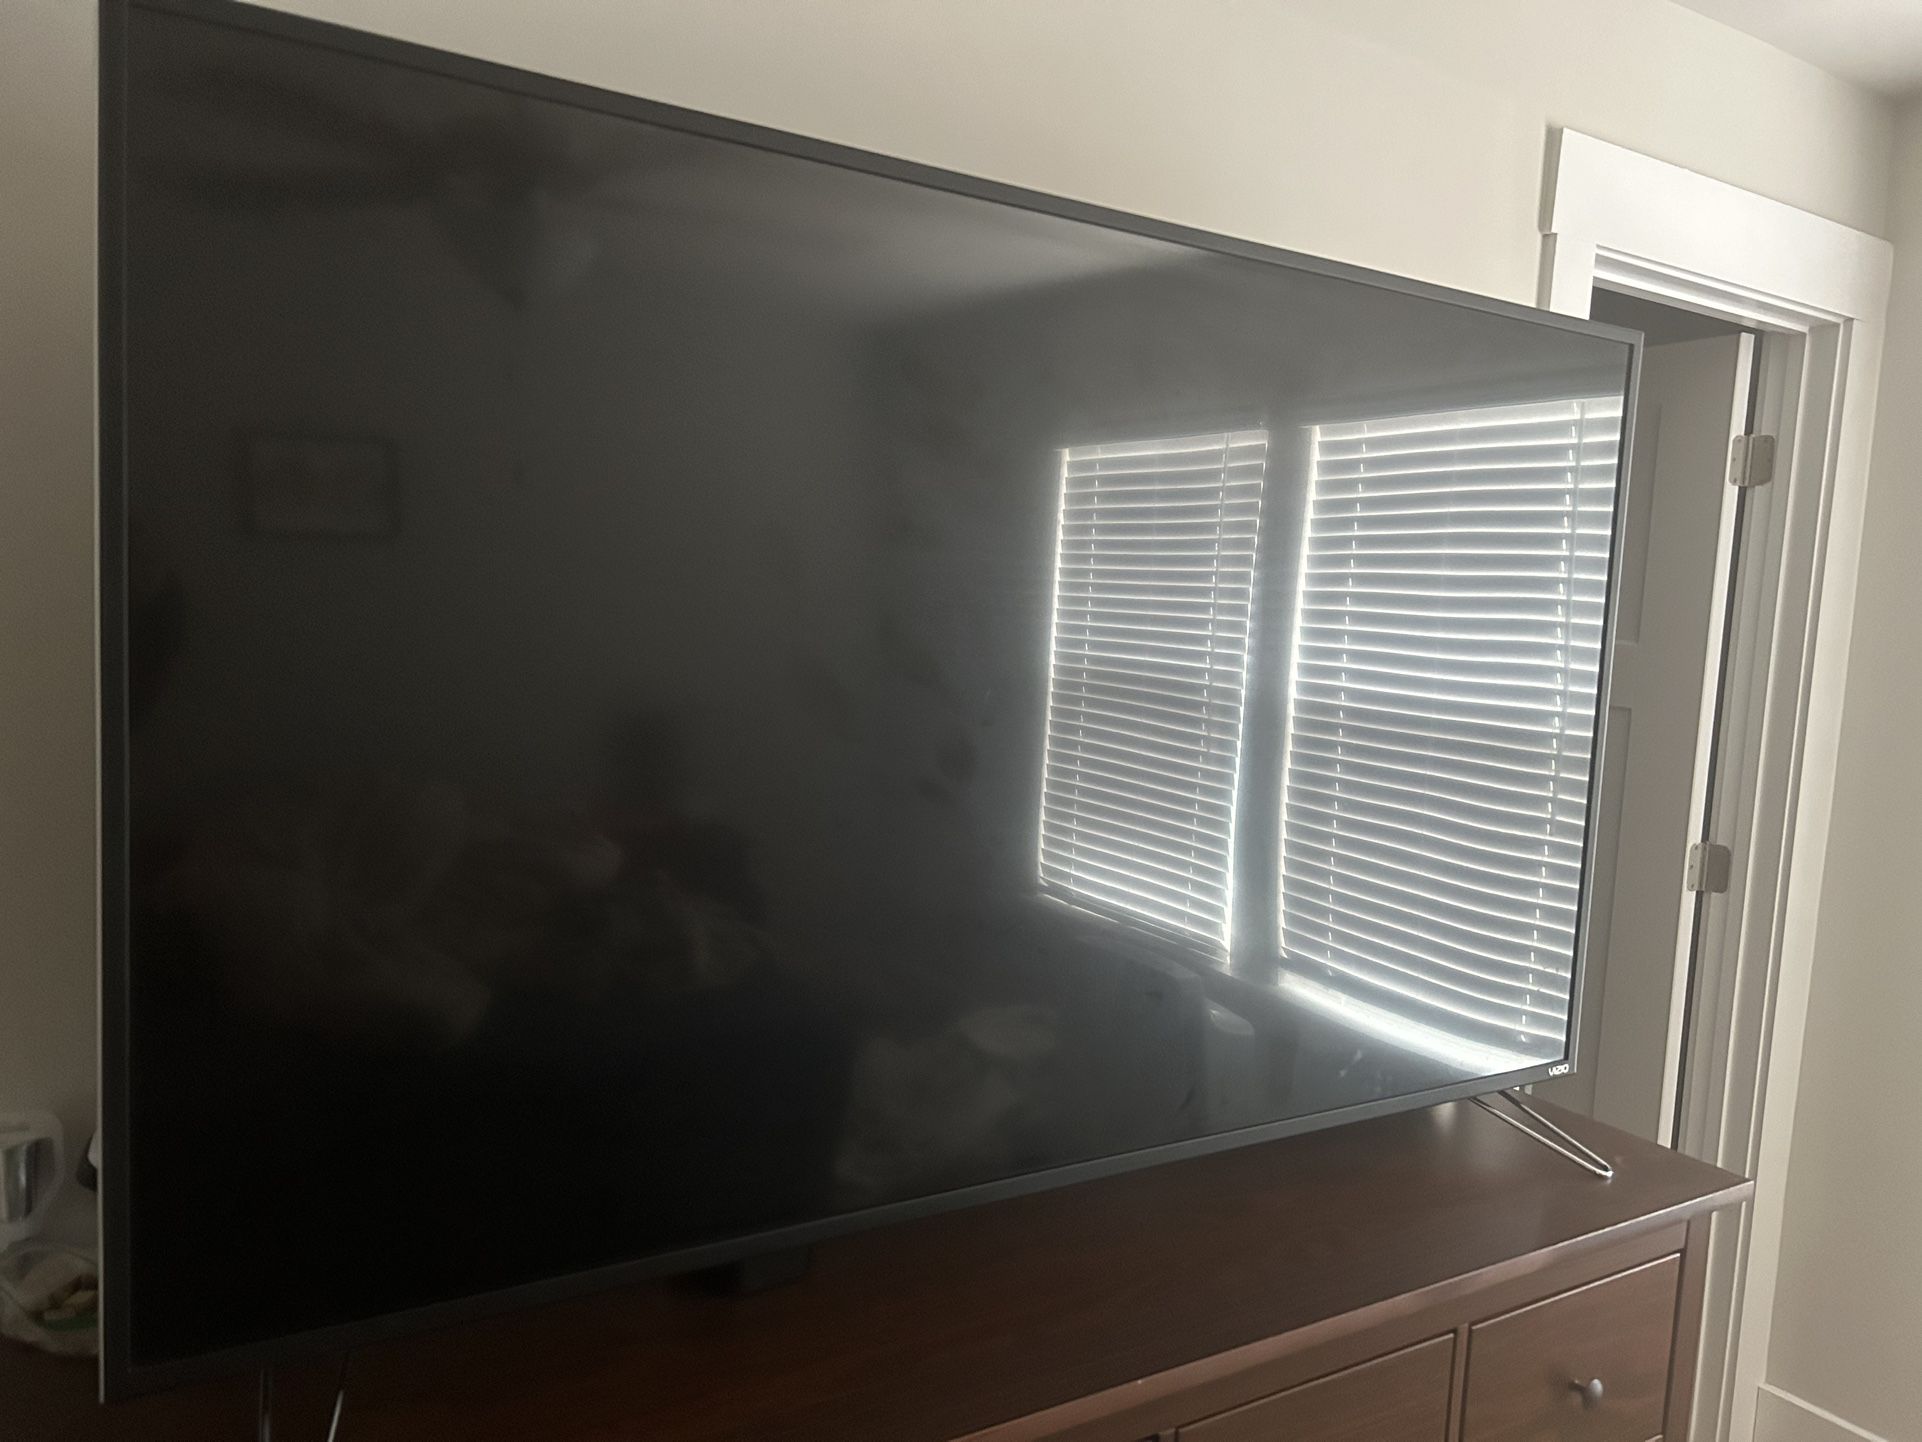 65” LED Vizio Flat Screen TV